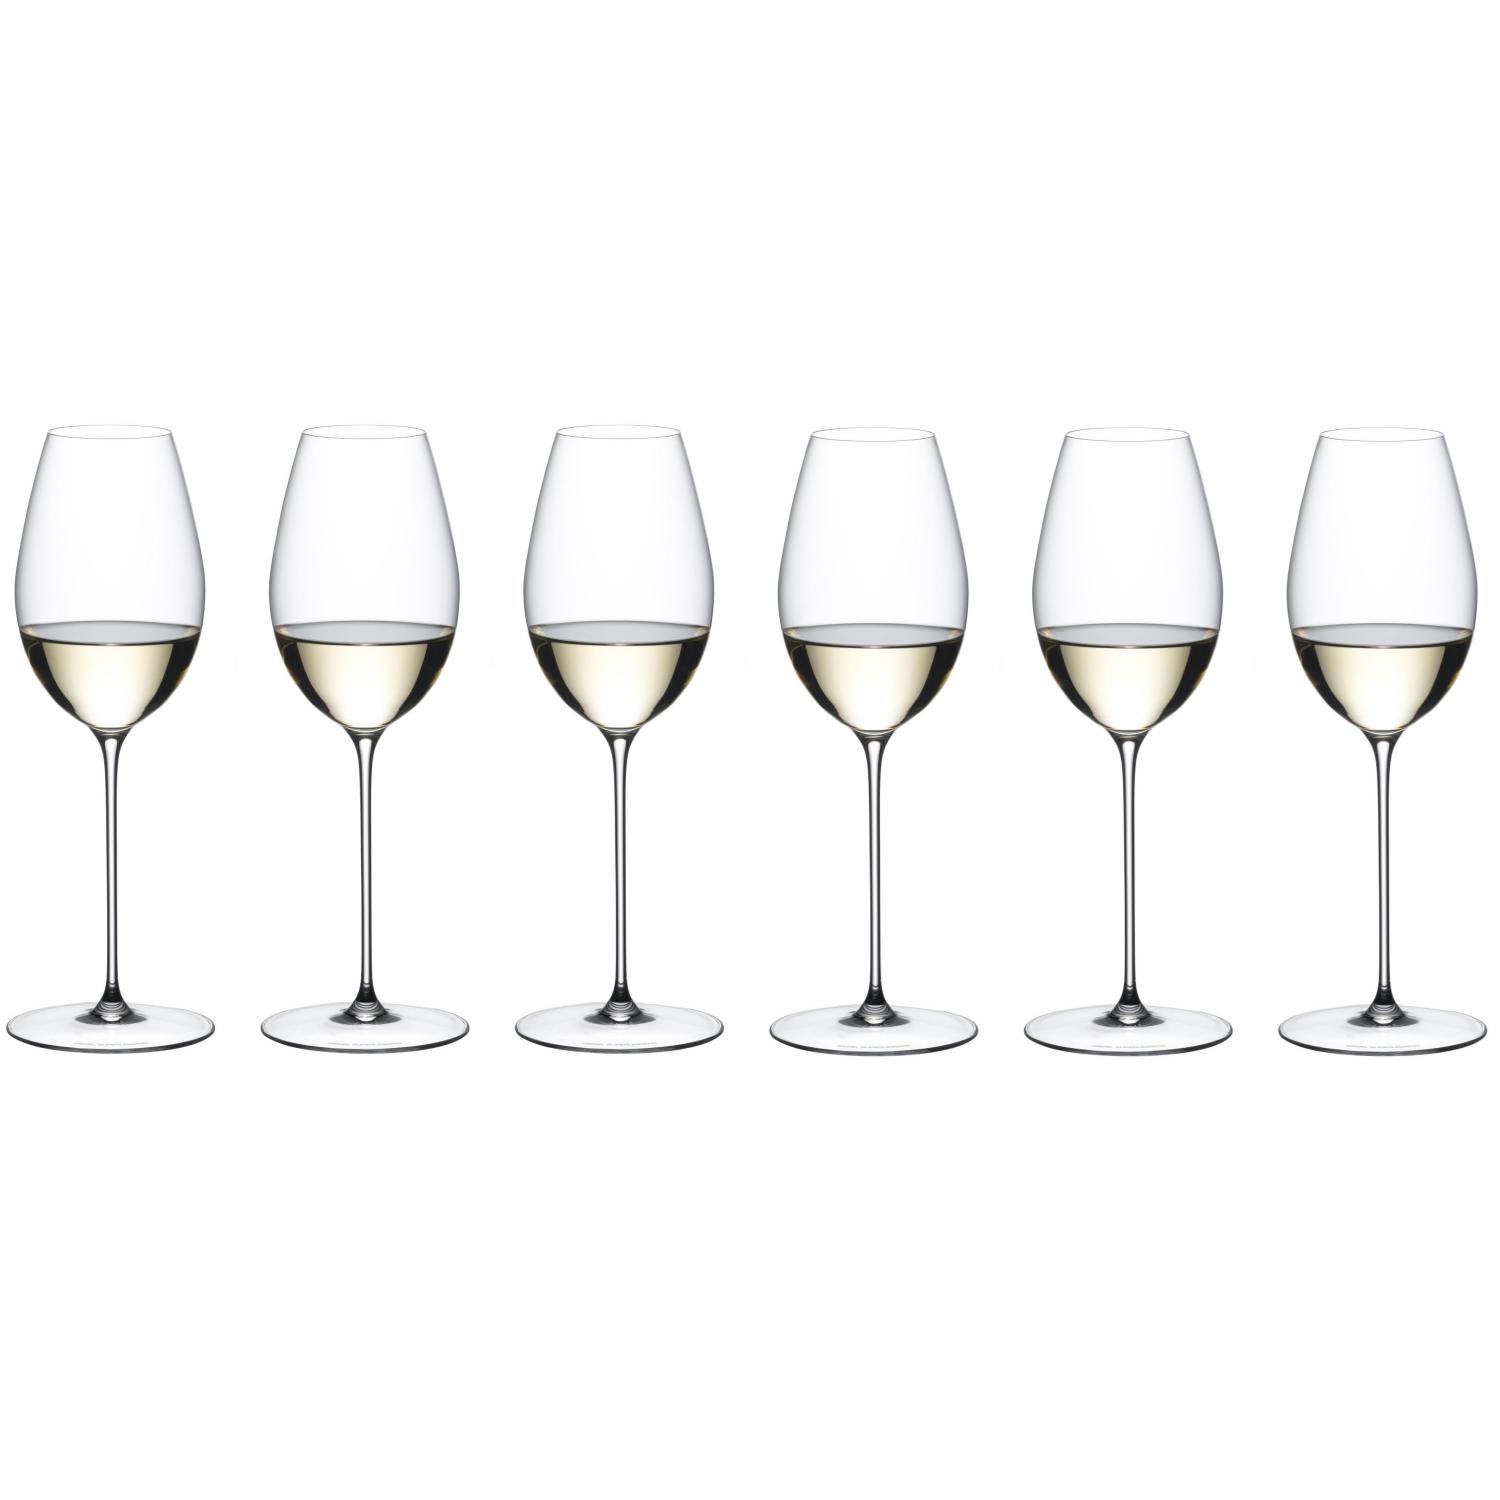 6 бокалов для белого вина RIEDEL Superleggero Party Set Sauvignon Blanc 400 мл